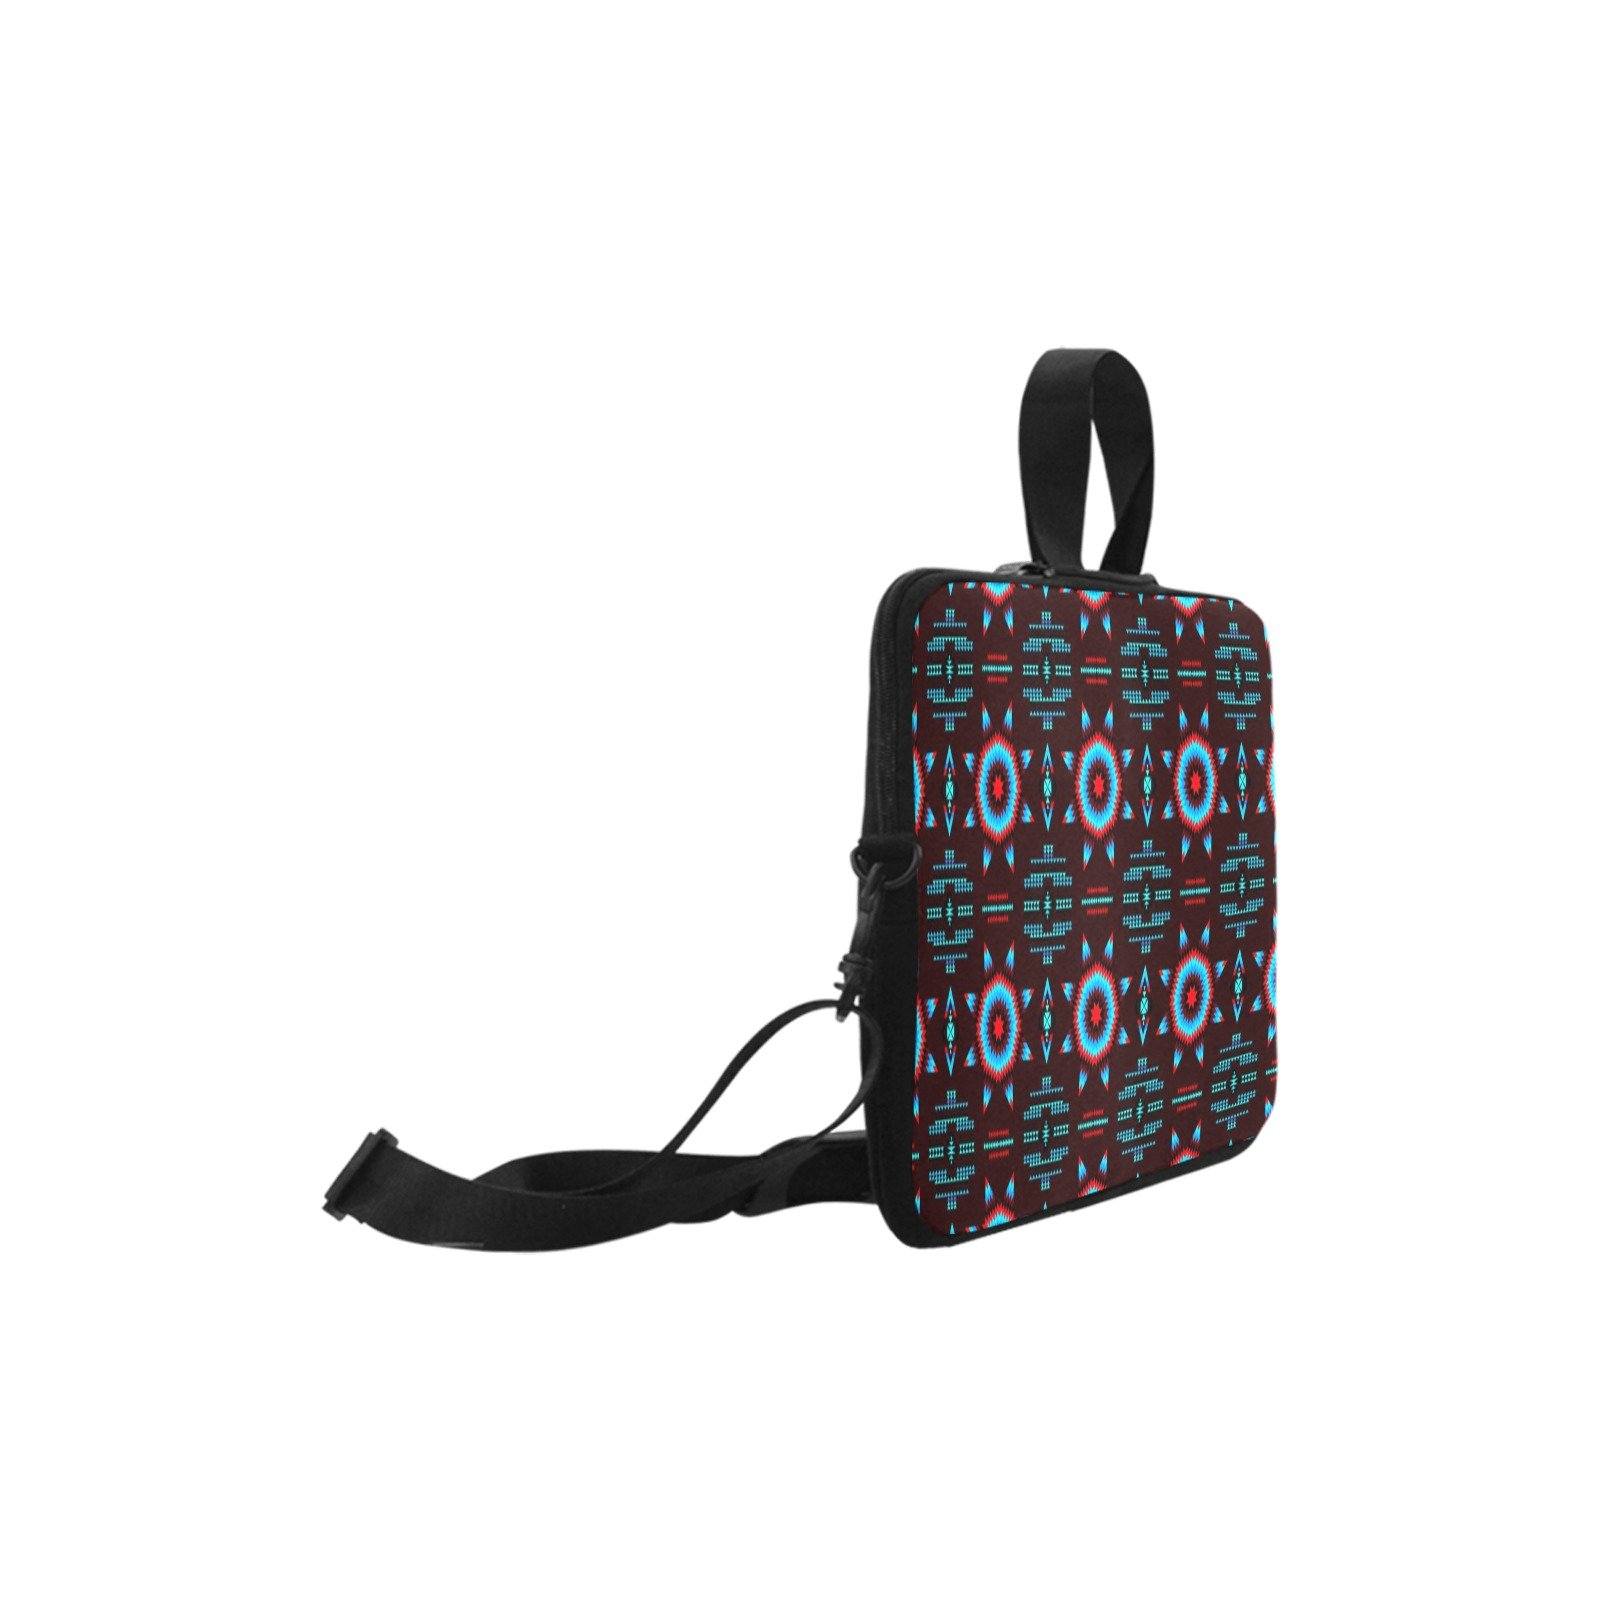 Rising Star Corn Moon Laptop Handbags 10" bag e-joyer 